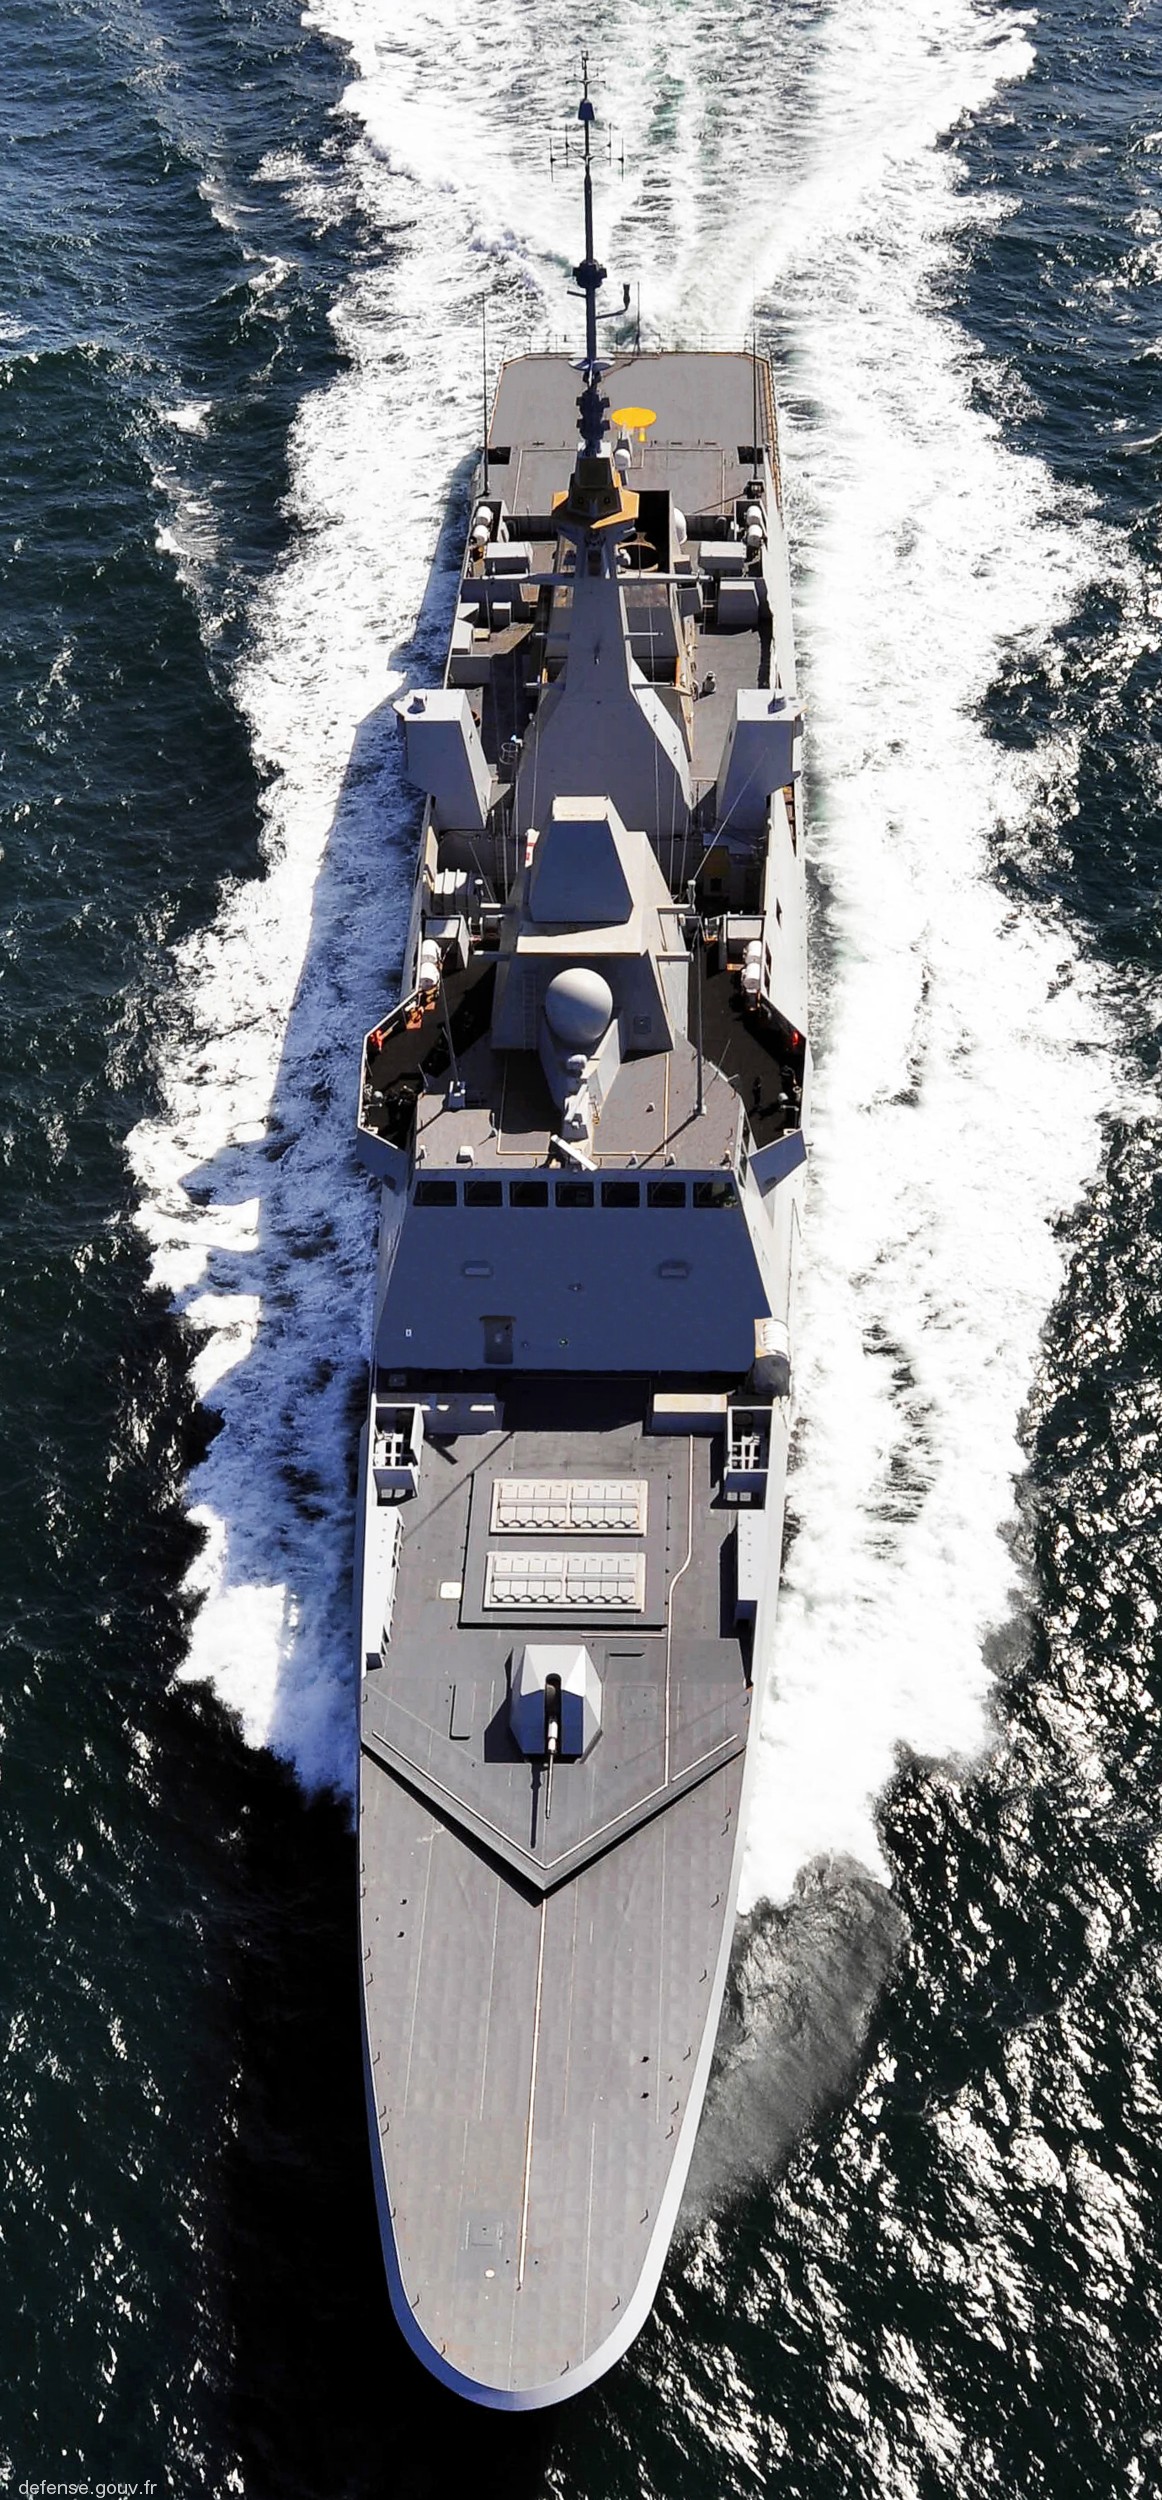 d-650 fs aquitaine fremm class frigate fregate multi purpose french navy marine nationale 12